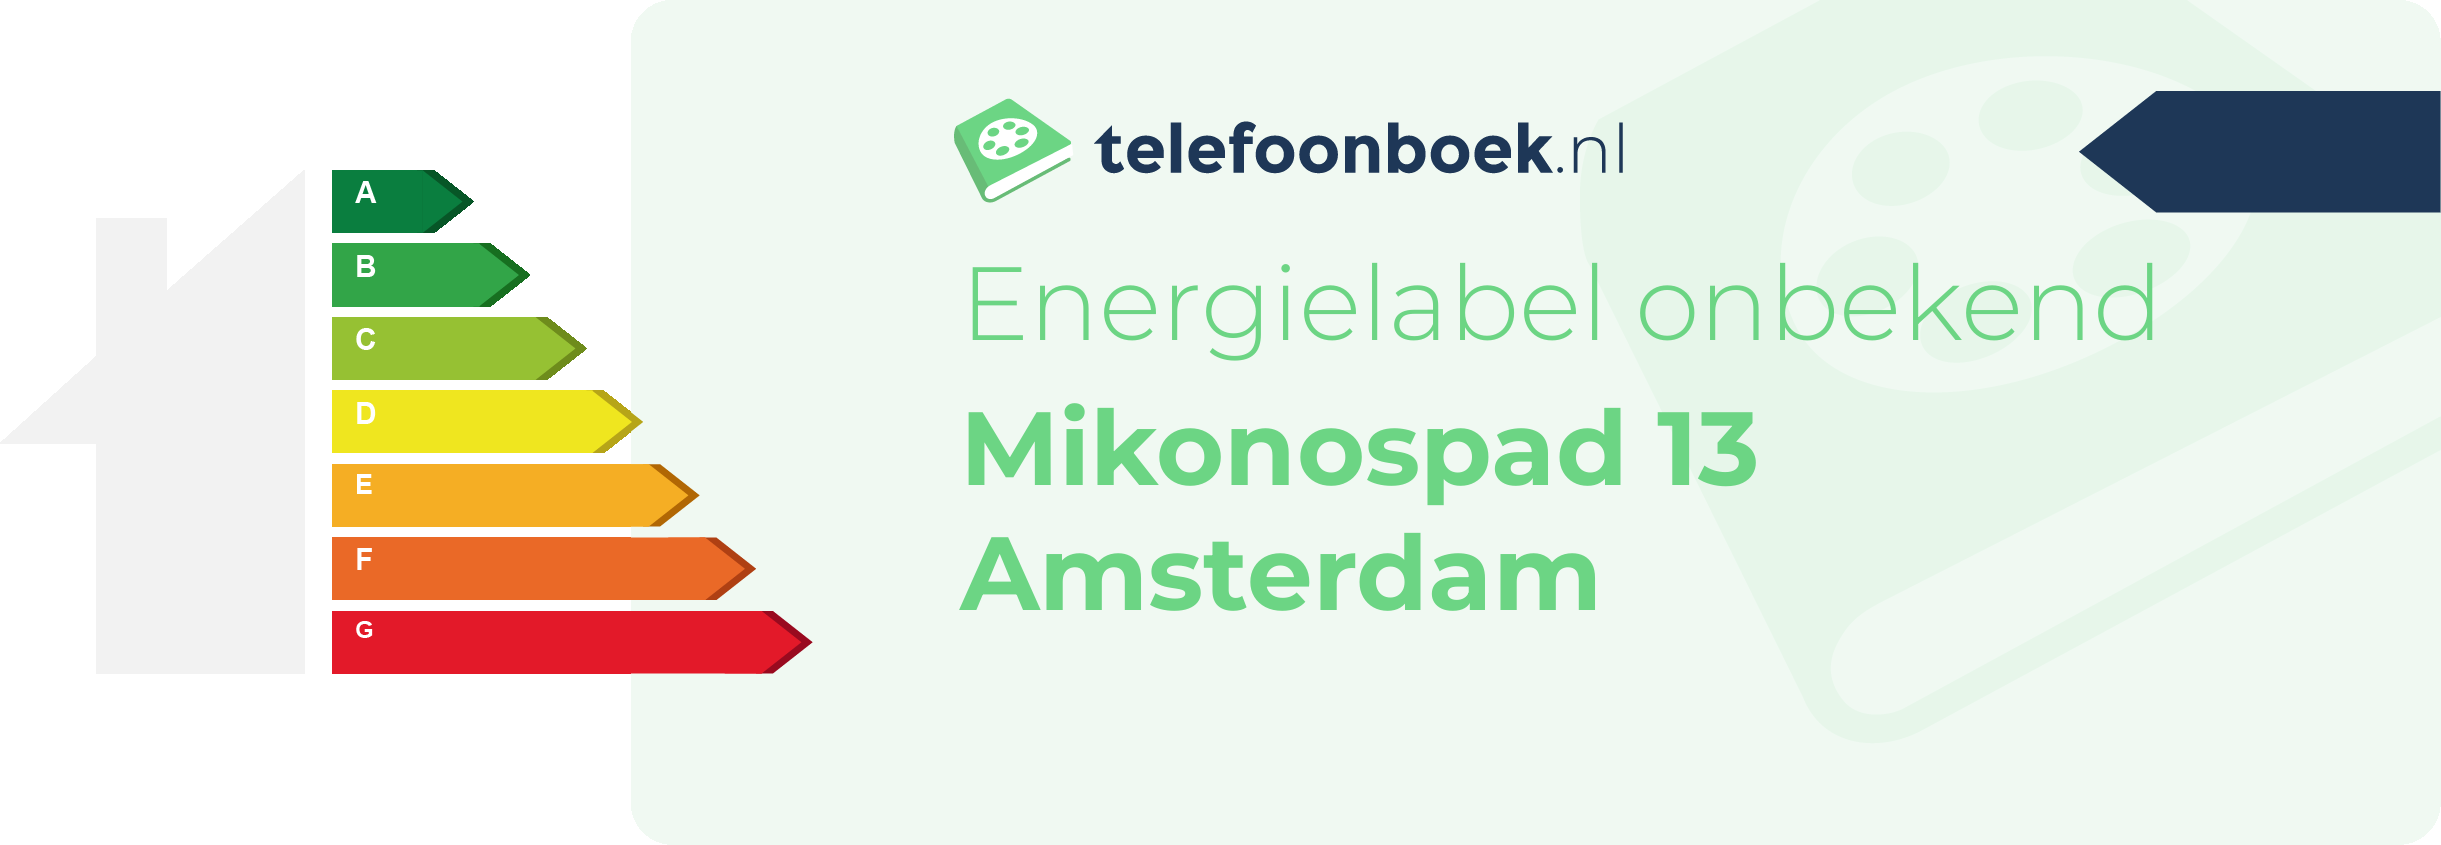 Energielabel Mikonospad 13 Amsterdam